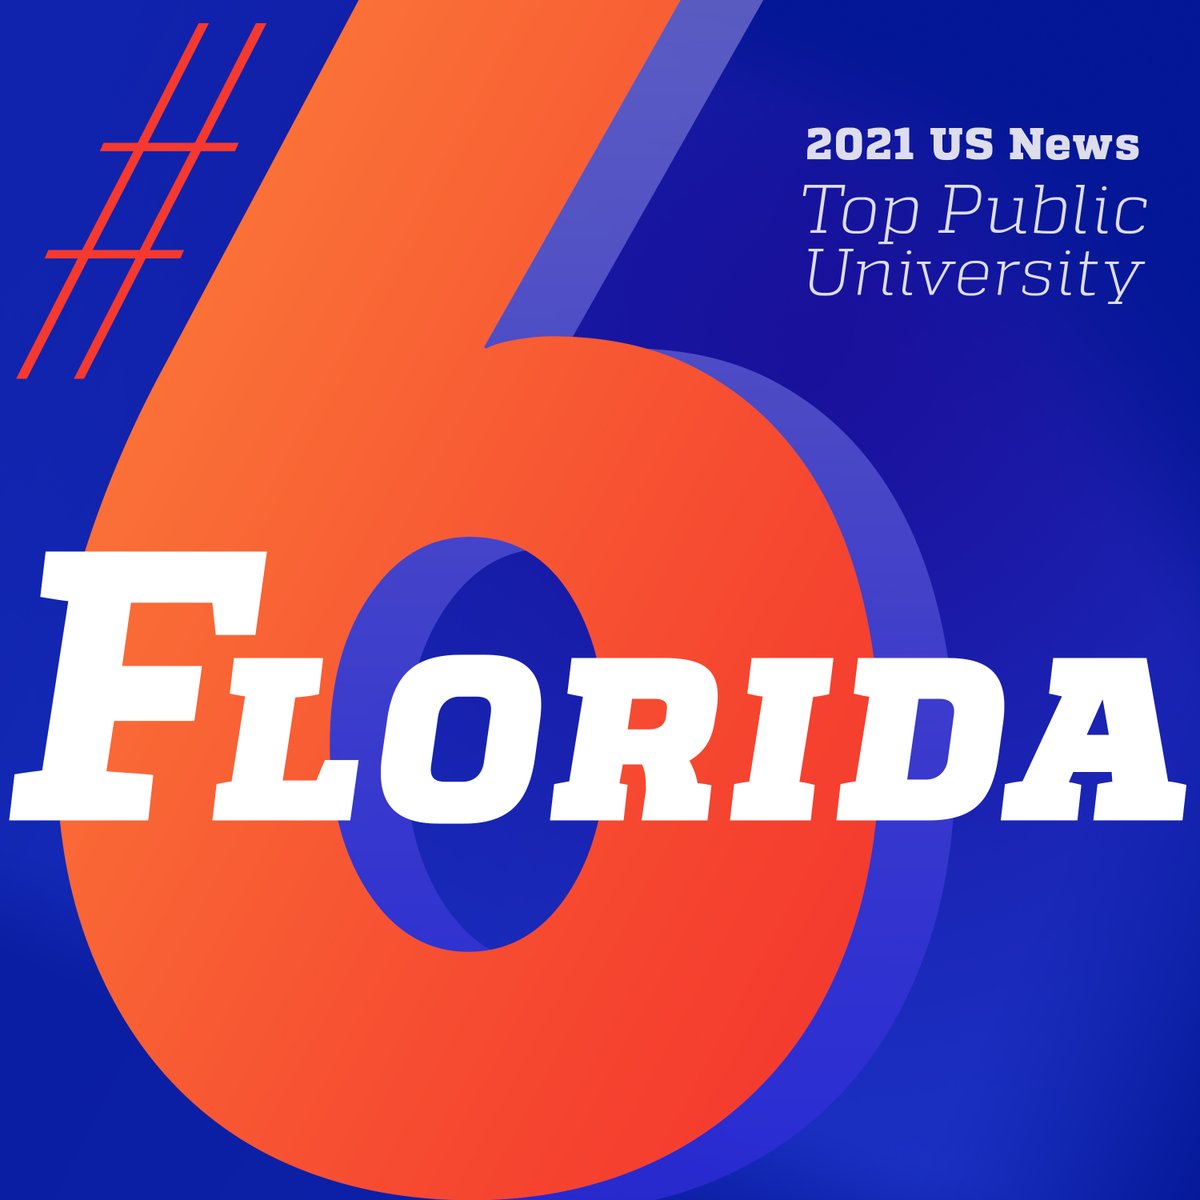 The rise continues. It’s great to be a Florida Gator!

2021: 6⃣
2020: 7️⃣
2019: 8️⃣
2018: 9️⃣

facebook.com/notes/universi…

#UFRising #BestColleges #GoGators